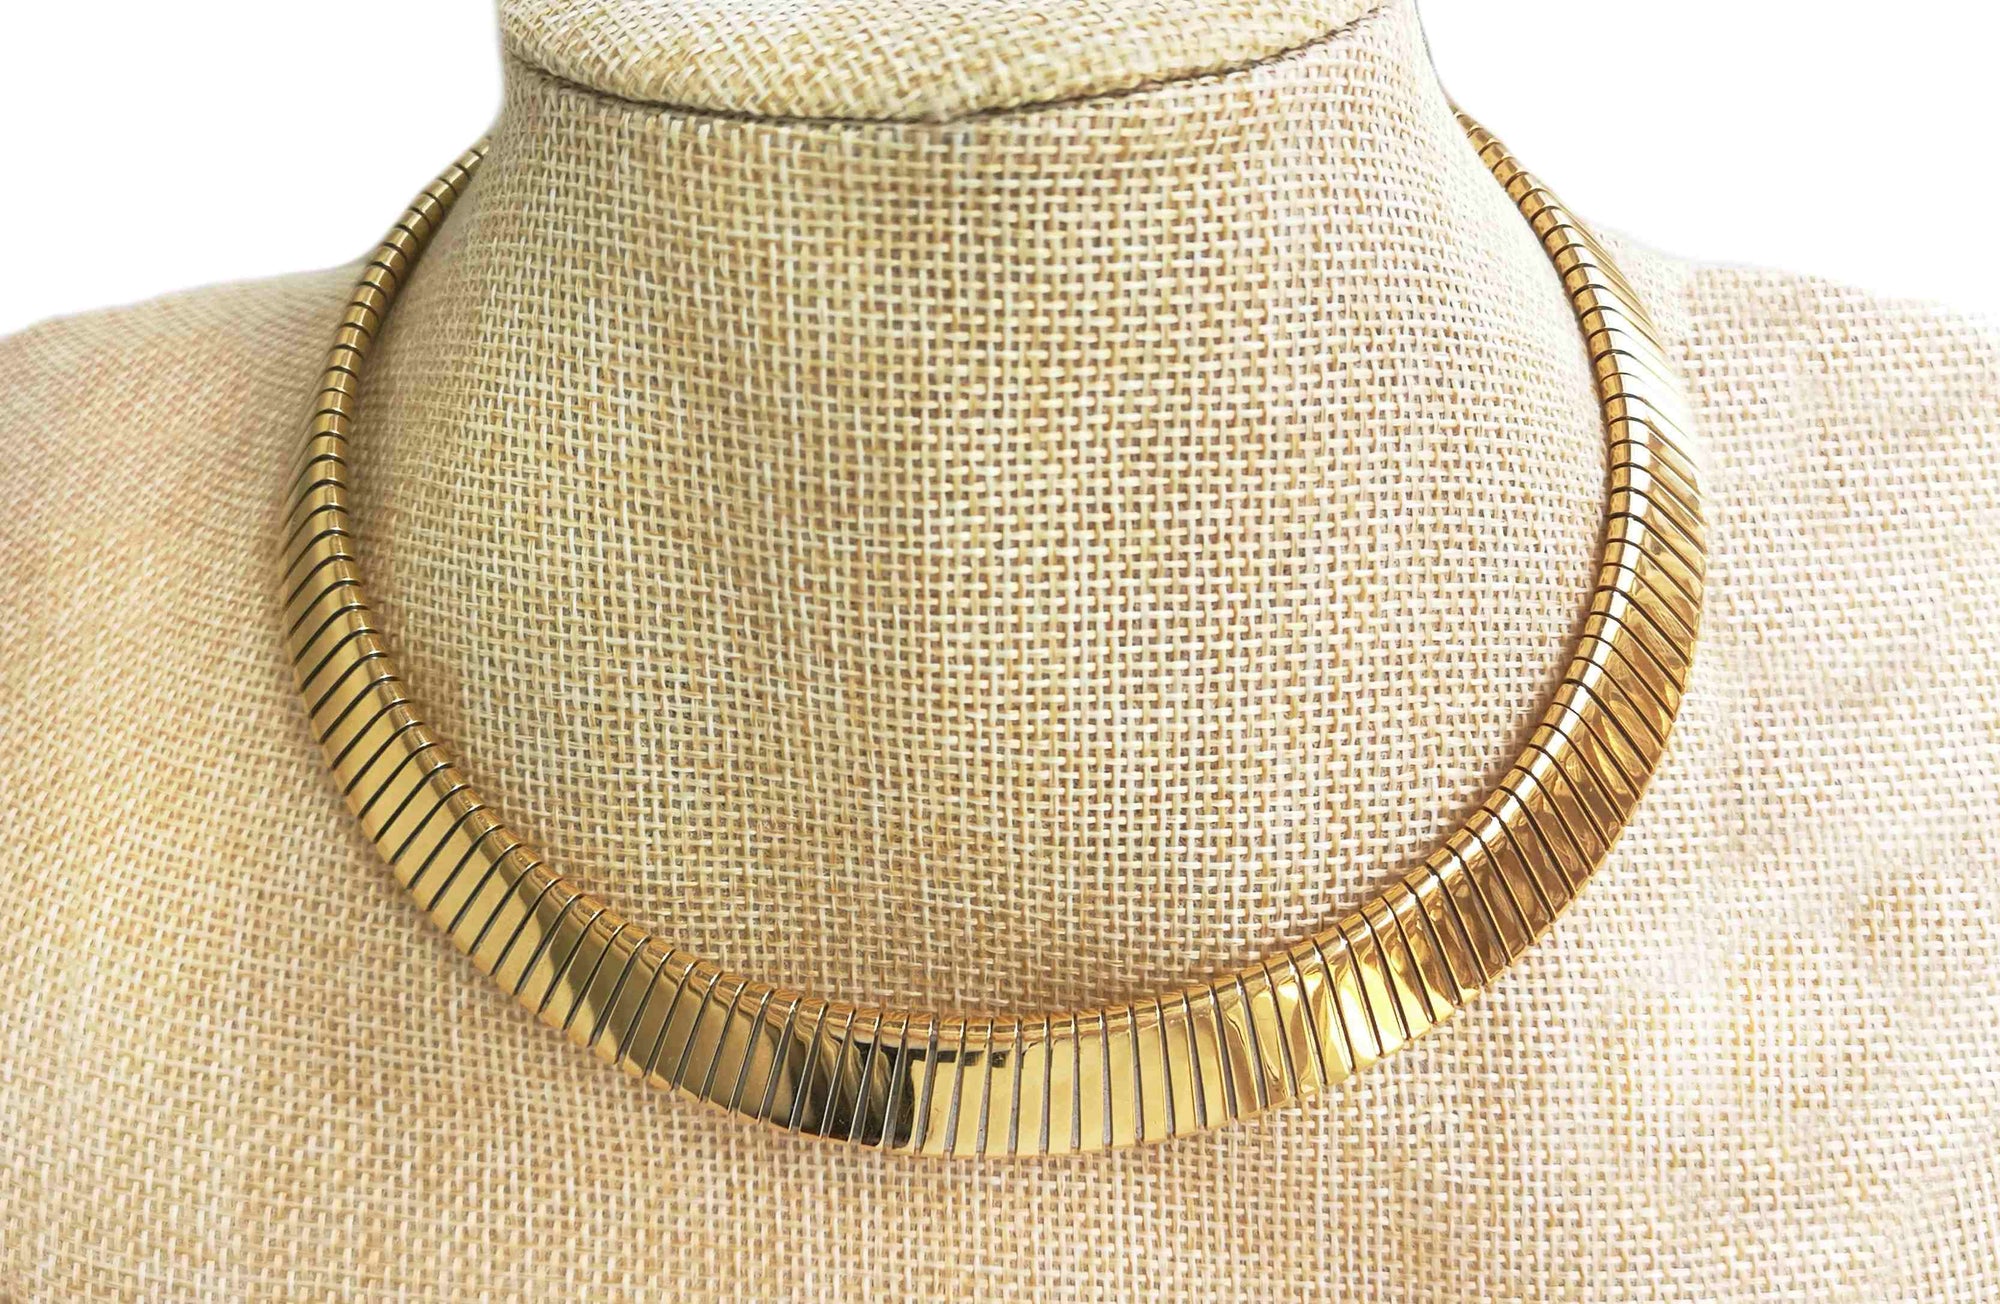 Necklace Choker 70s Style White Beads Fashion Jewelry 14